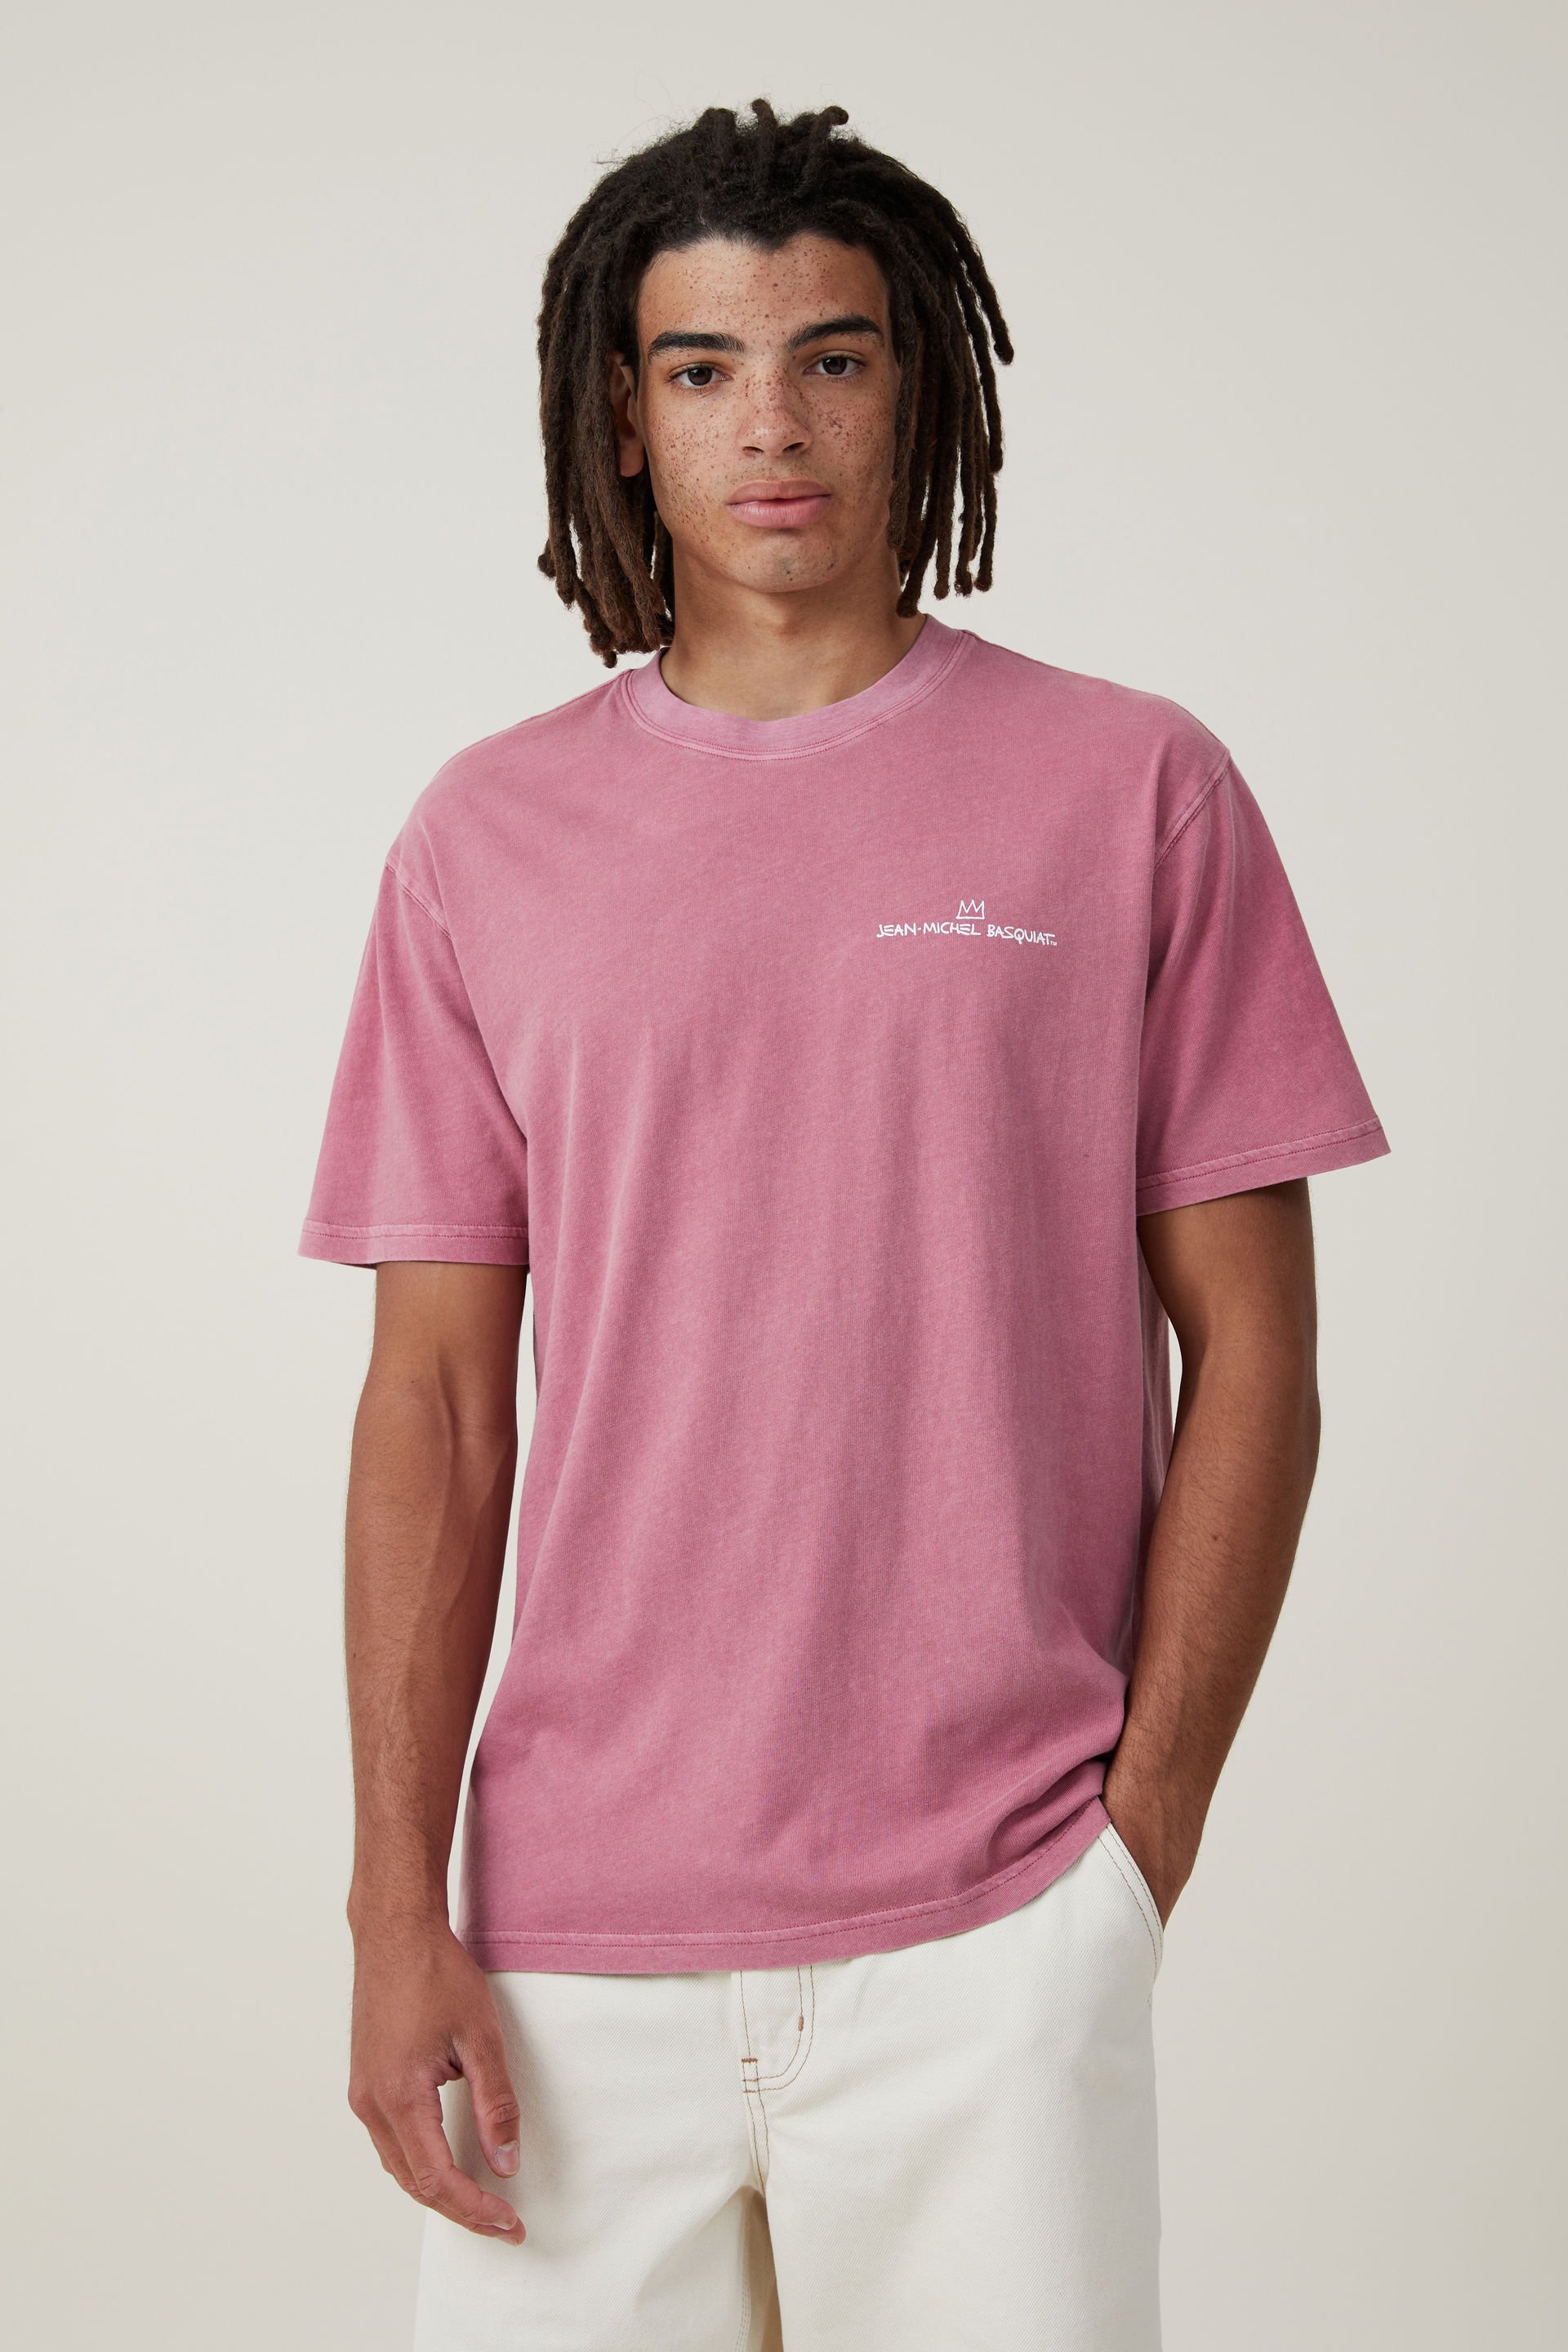 Cotton On Men - Basquiat Loose Fit T-Shirt - Lcn bsq raspberry/lightning